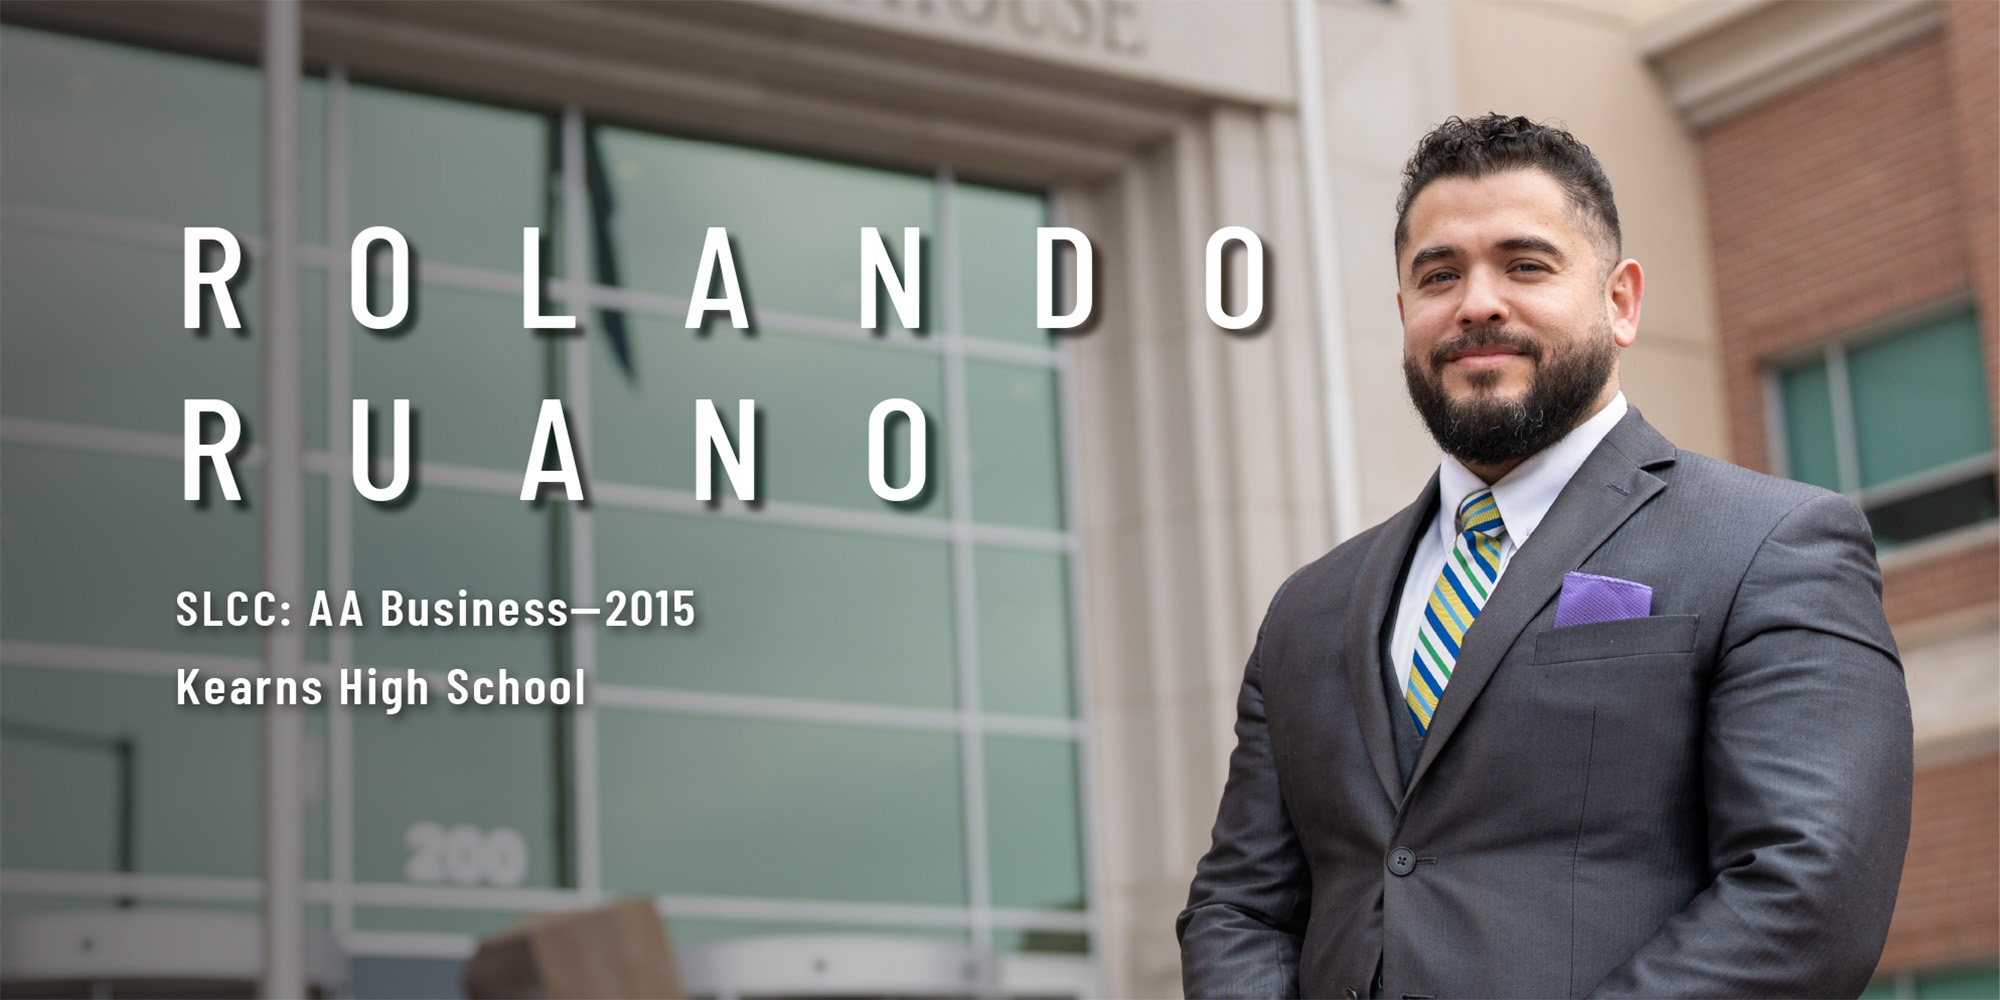 Rolando Ruano, SLCC AA Business in 2015, From Kearns High School